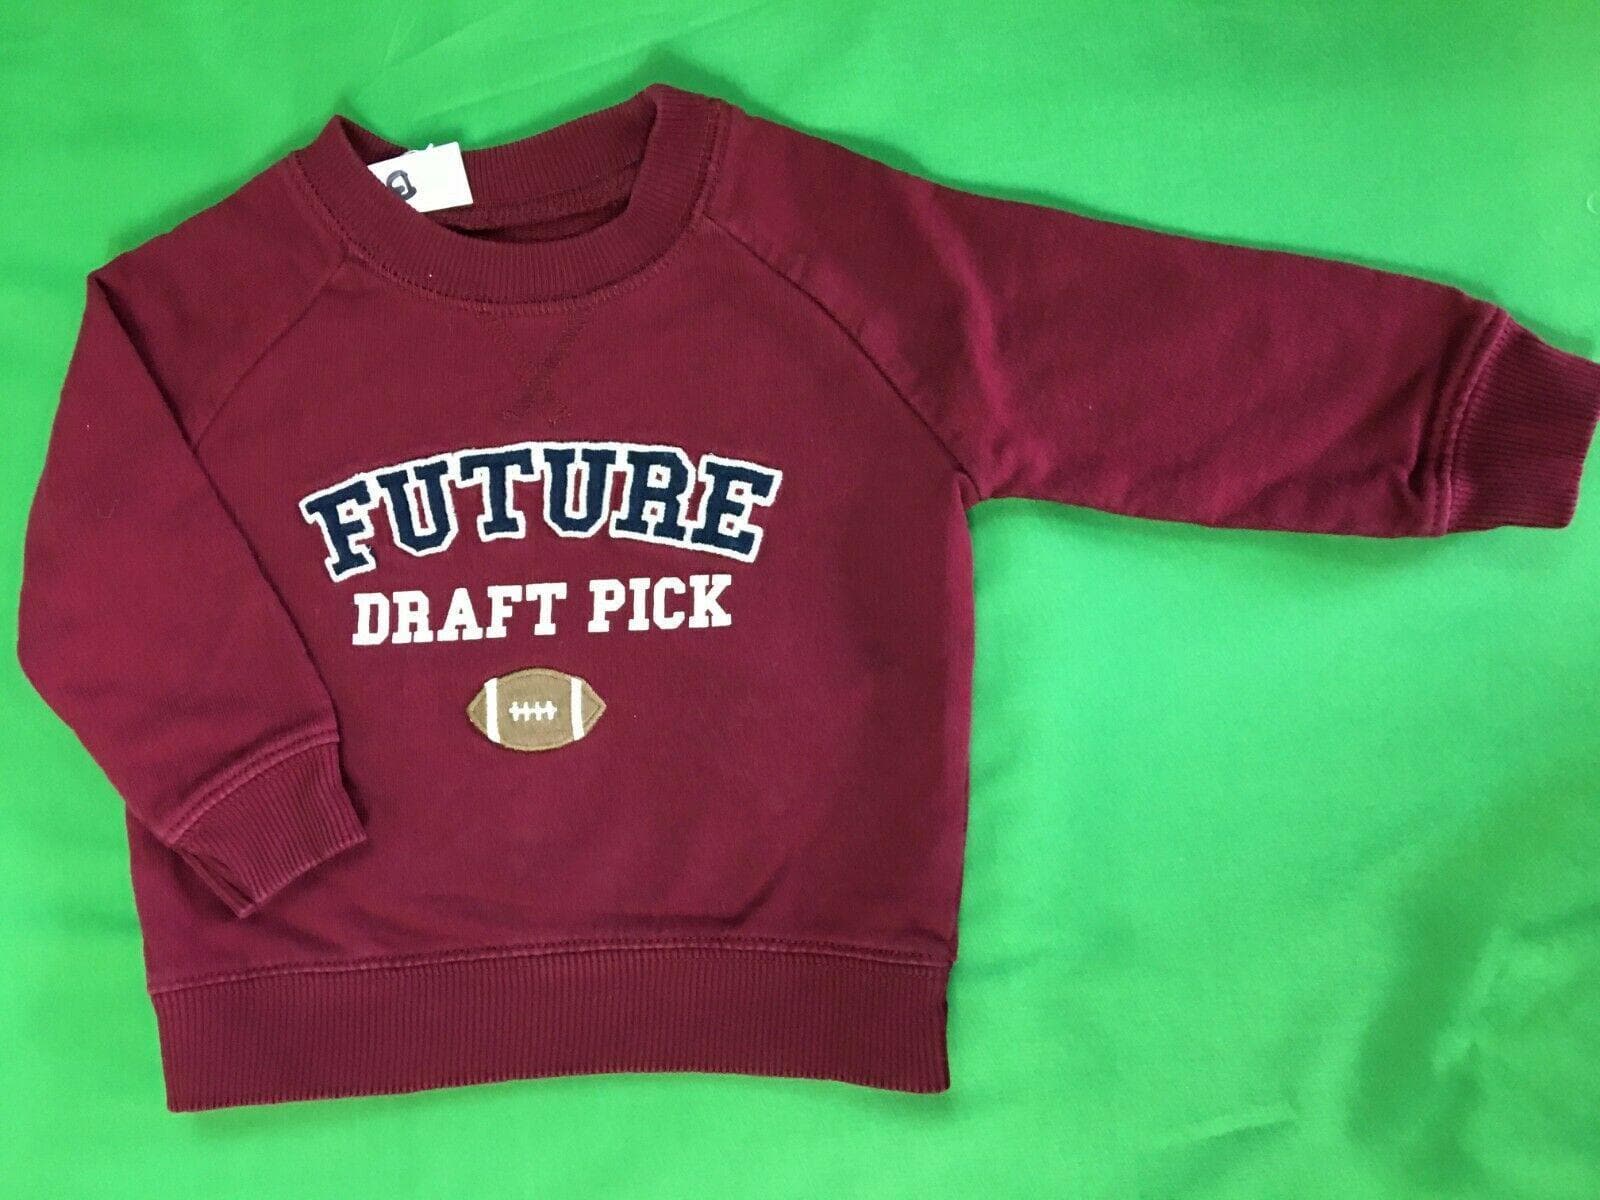 NFL NCAA American Football "Future Draft Pick" Sweatshirt Baby 6 Months